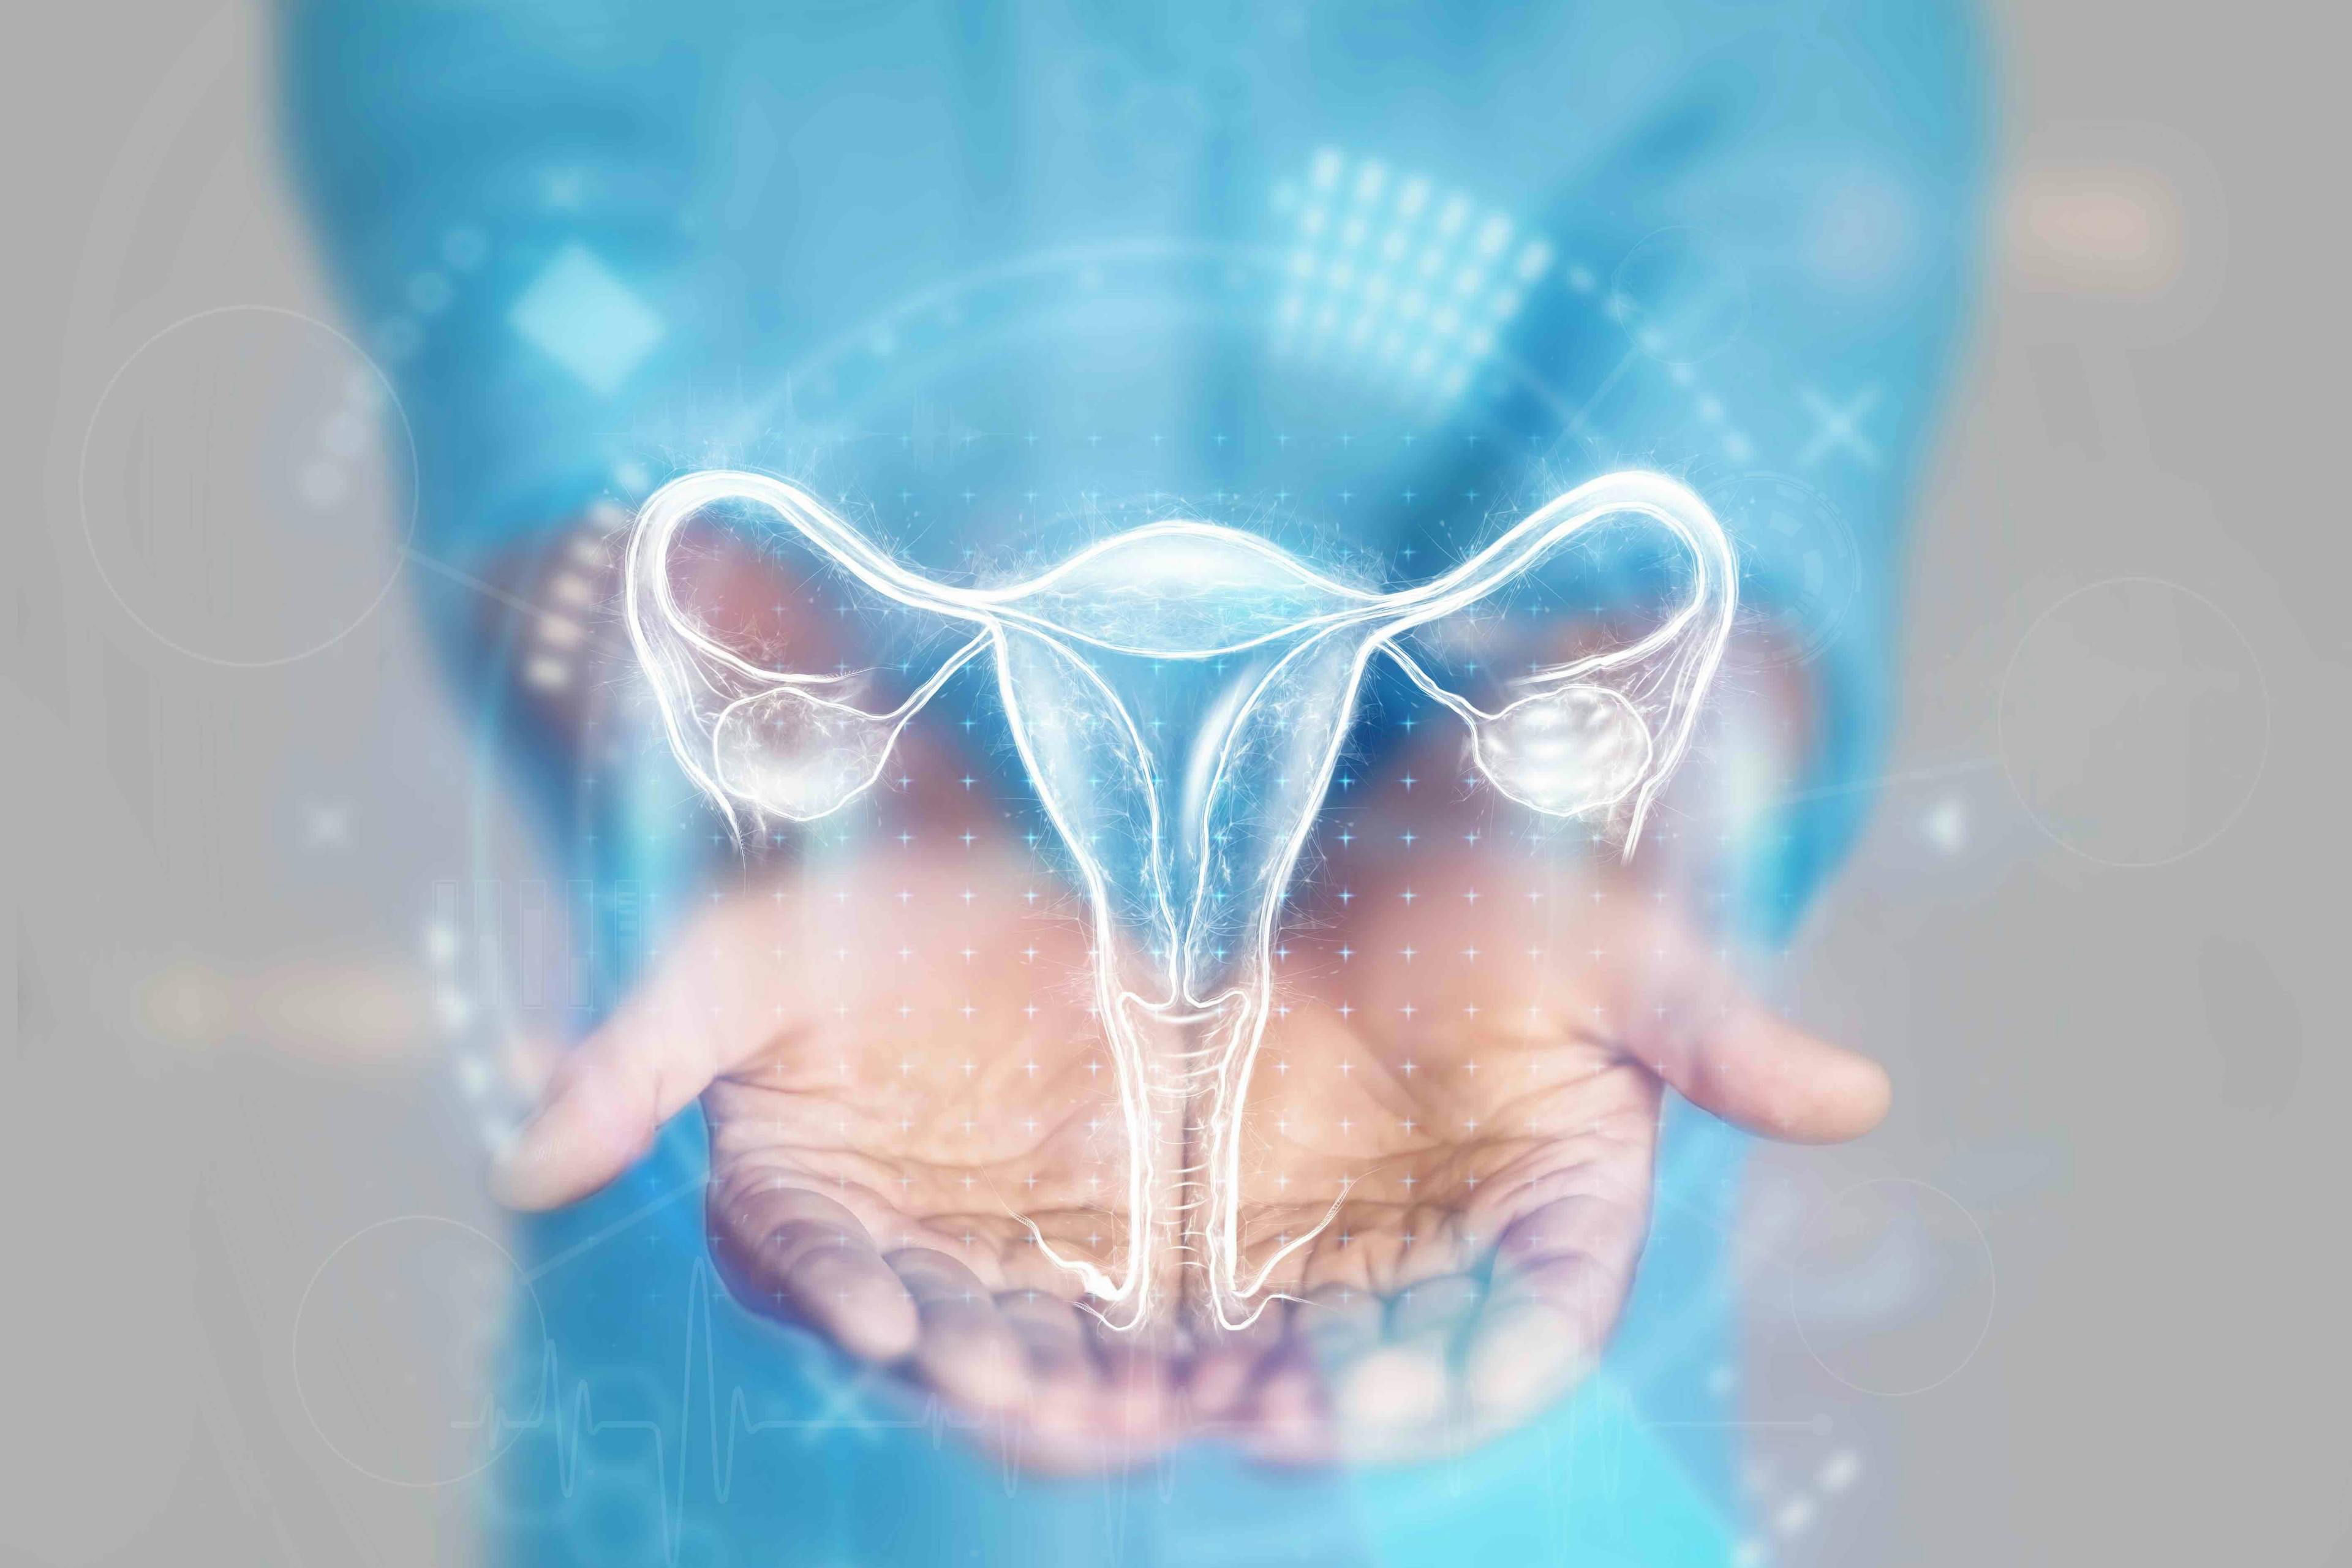 Female reproductive system | Image credit: Aliaksandr Marko - stock.adobe.com